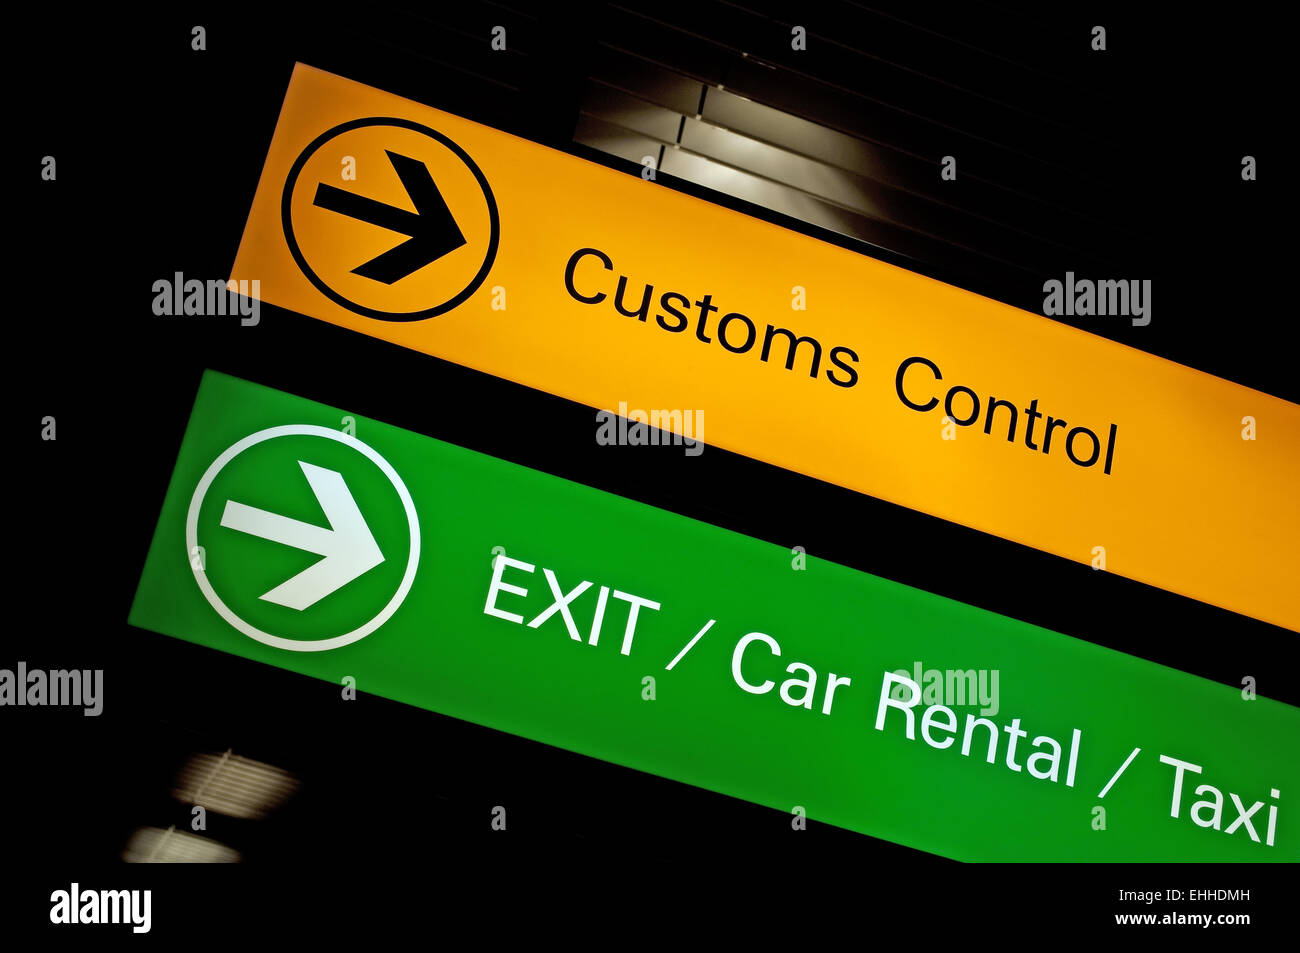 Customs control sign. Stock Photo